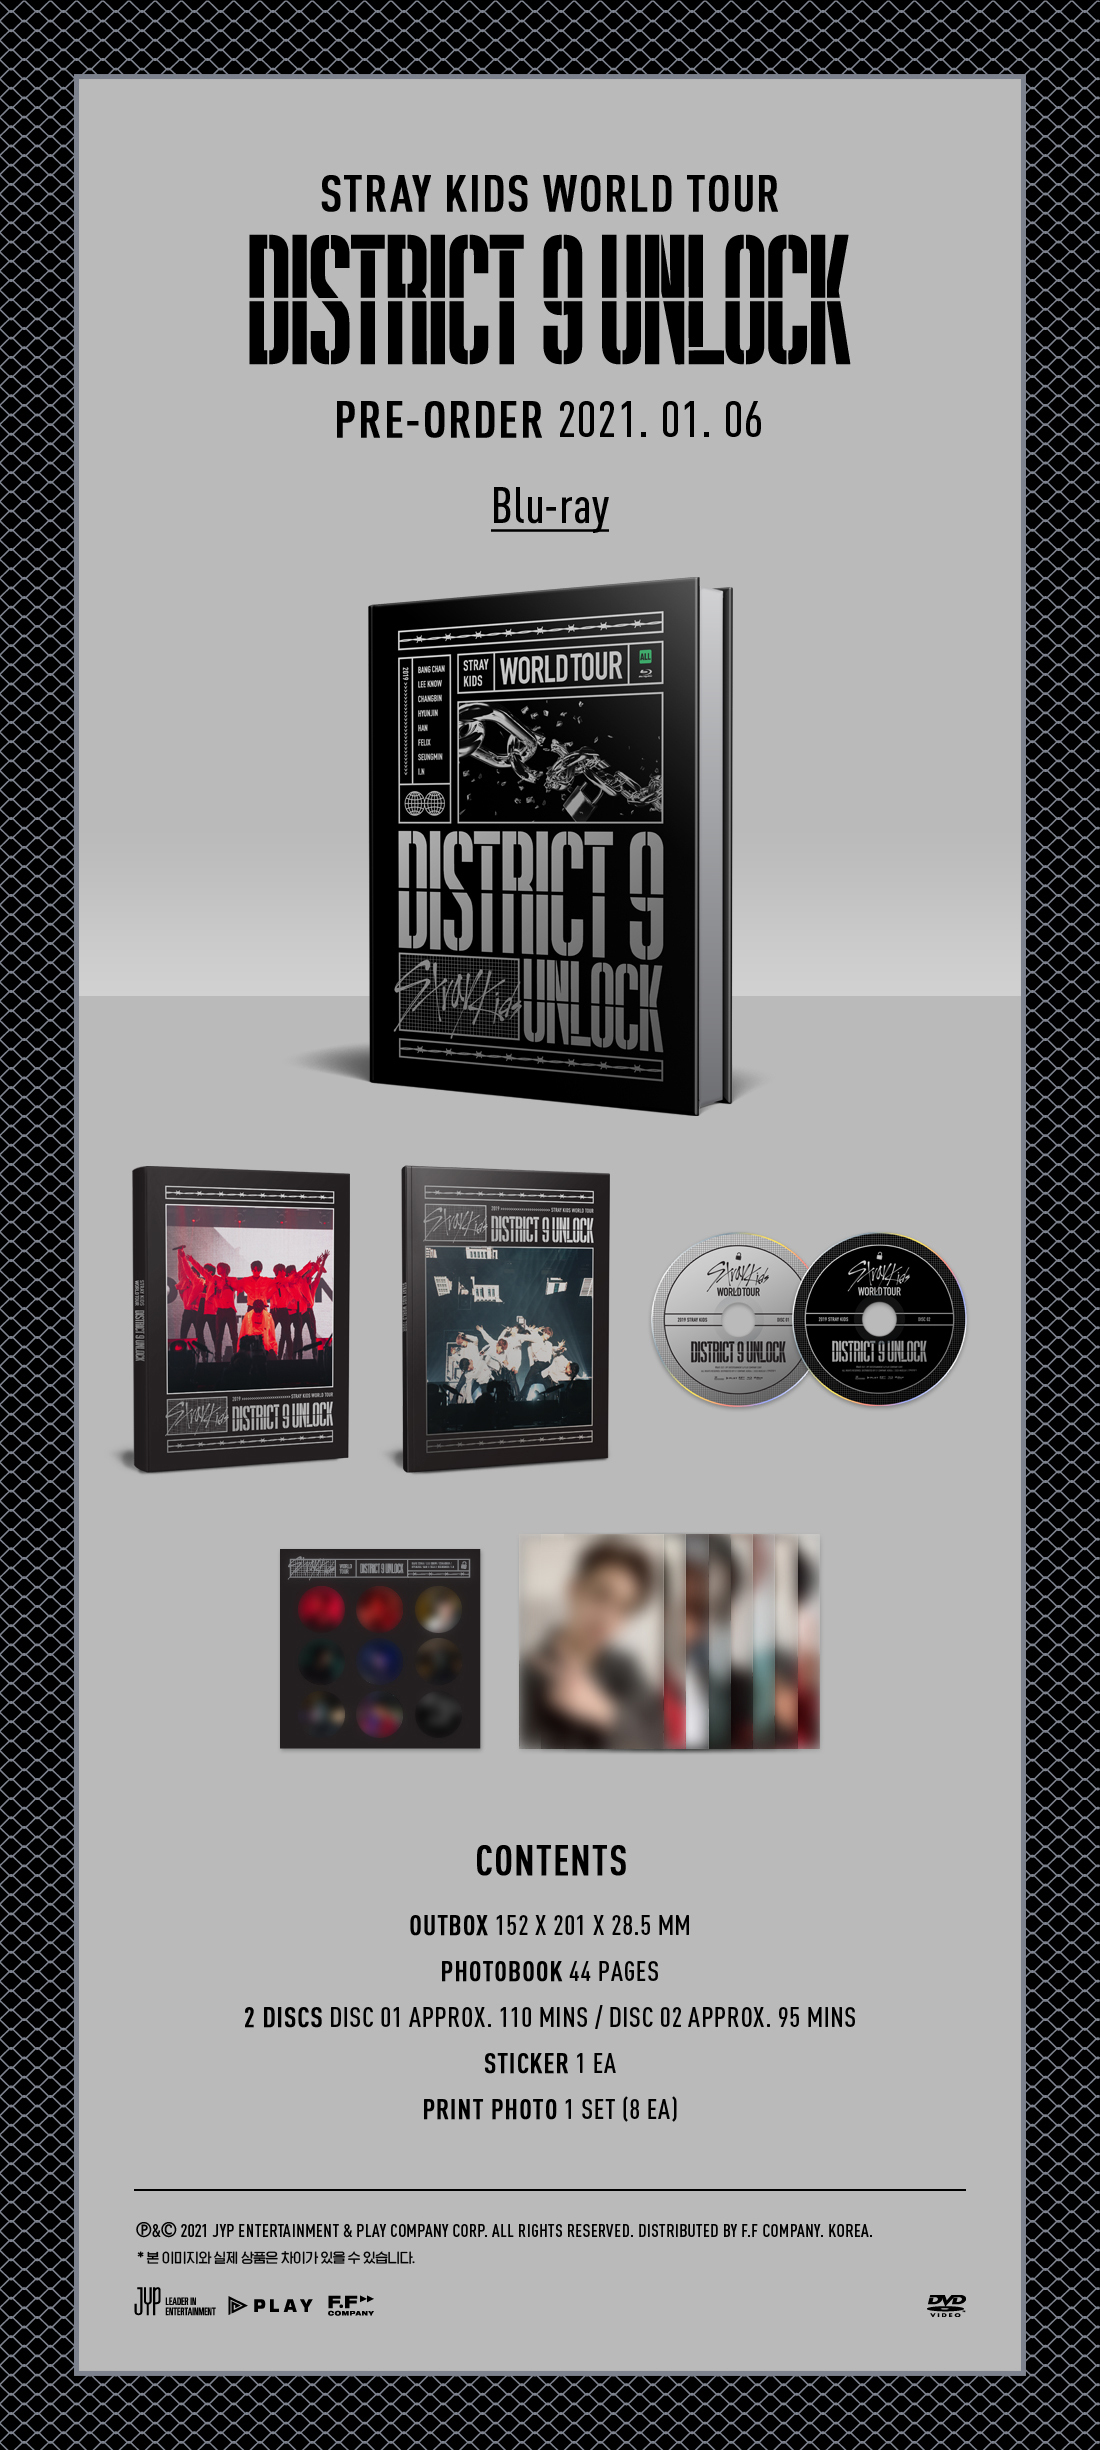 STRAY KIDS - World Tour [District 9 : Unlock' in SEOUL] (BLU-RAY) STRAYKIDS STRAYKIDS STRAYKIDSDVD STRAYKIDSBLURAY STRAYKIDSWorldTour STRAYKIDSDistrict9 District9Unlock'inSEOUL K-POPAlbum K-POP Iamyou